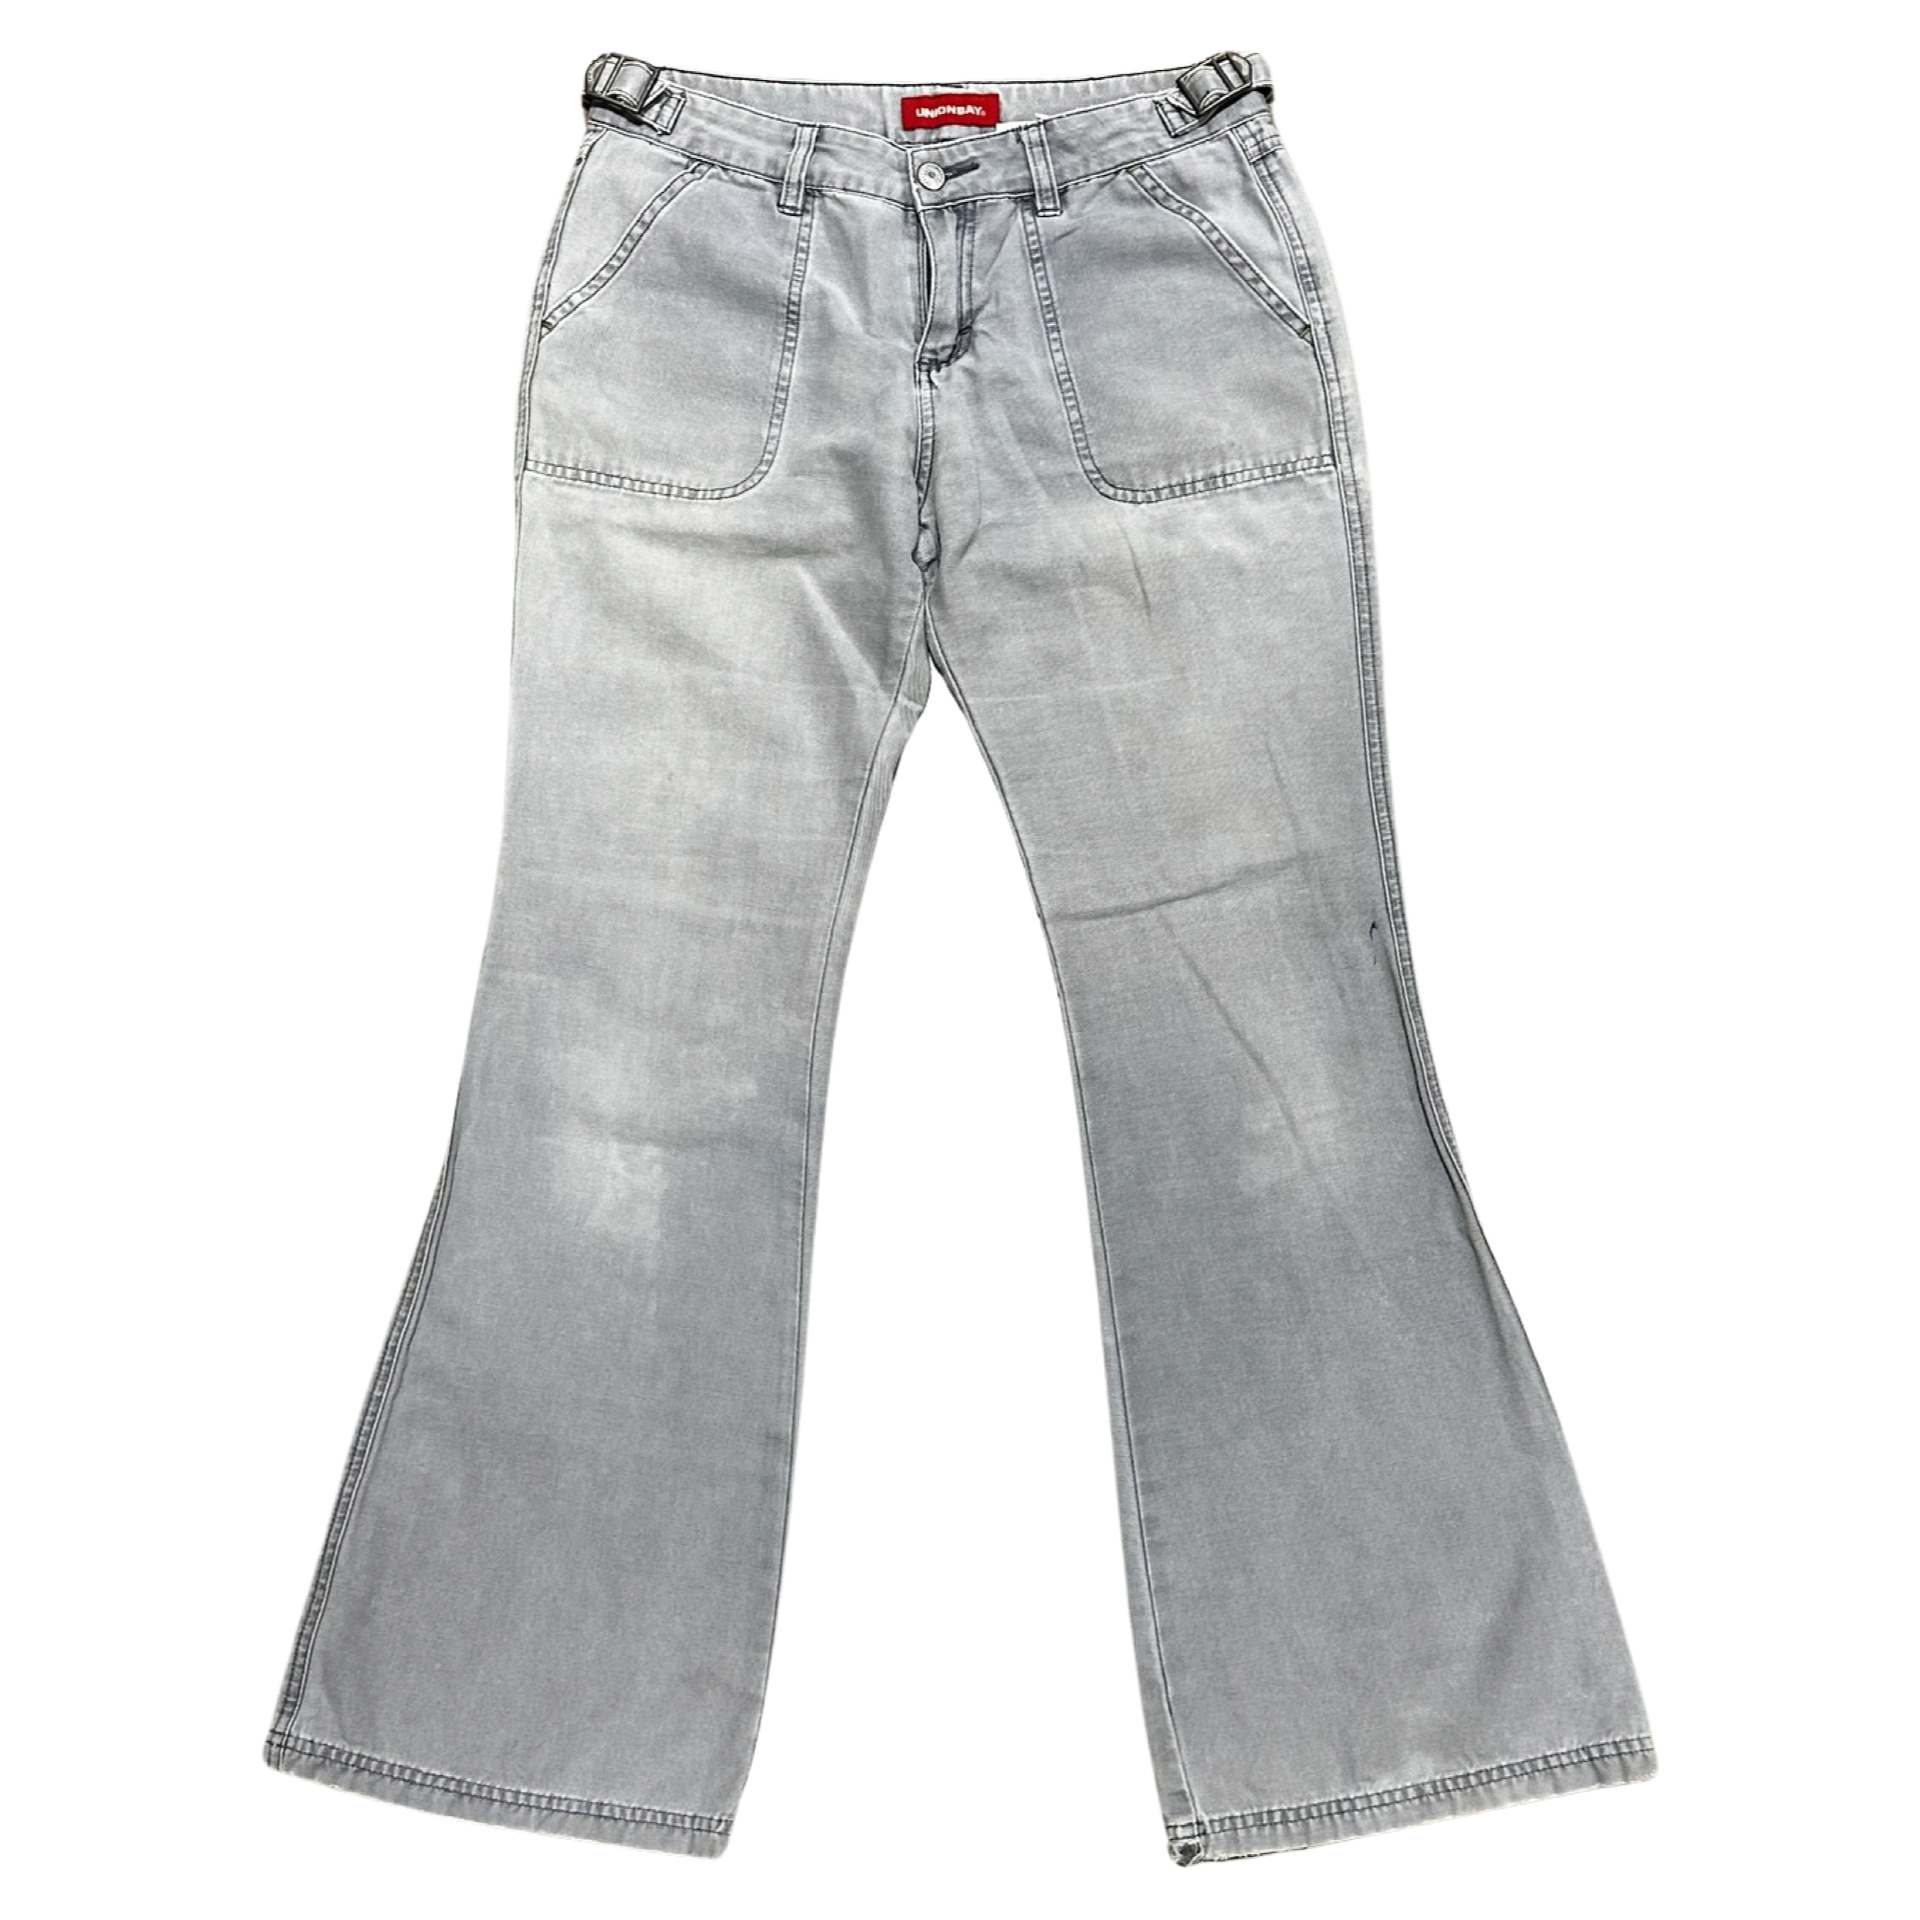 Vintage Y2K Union Bay Utlity Flare Pants (30x29.5) – Feels So Good